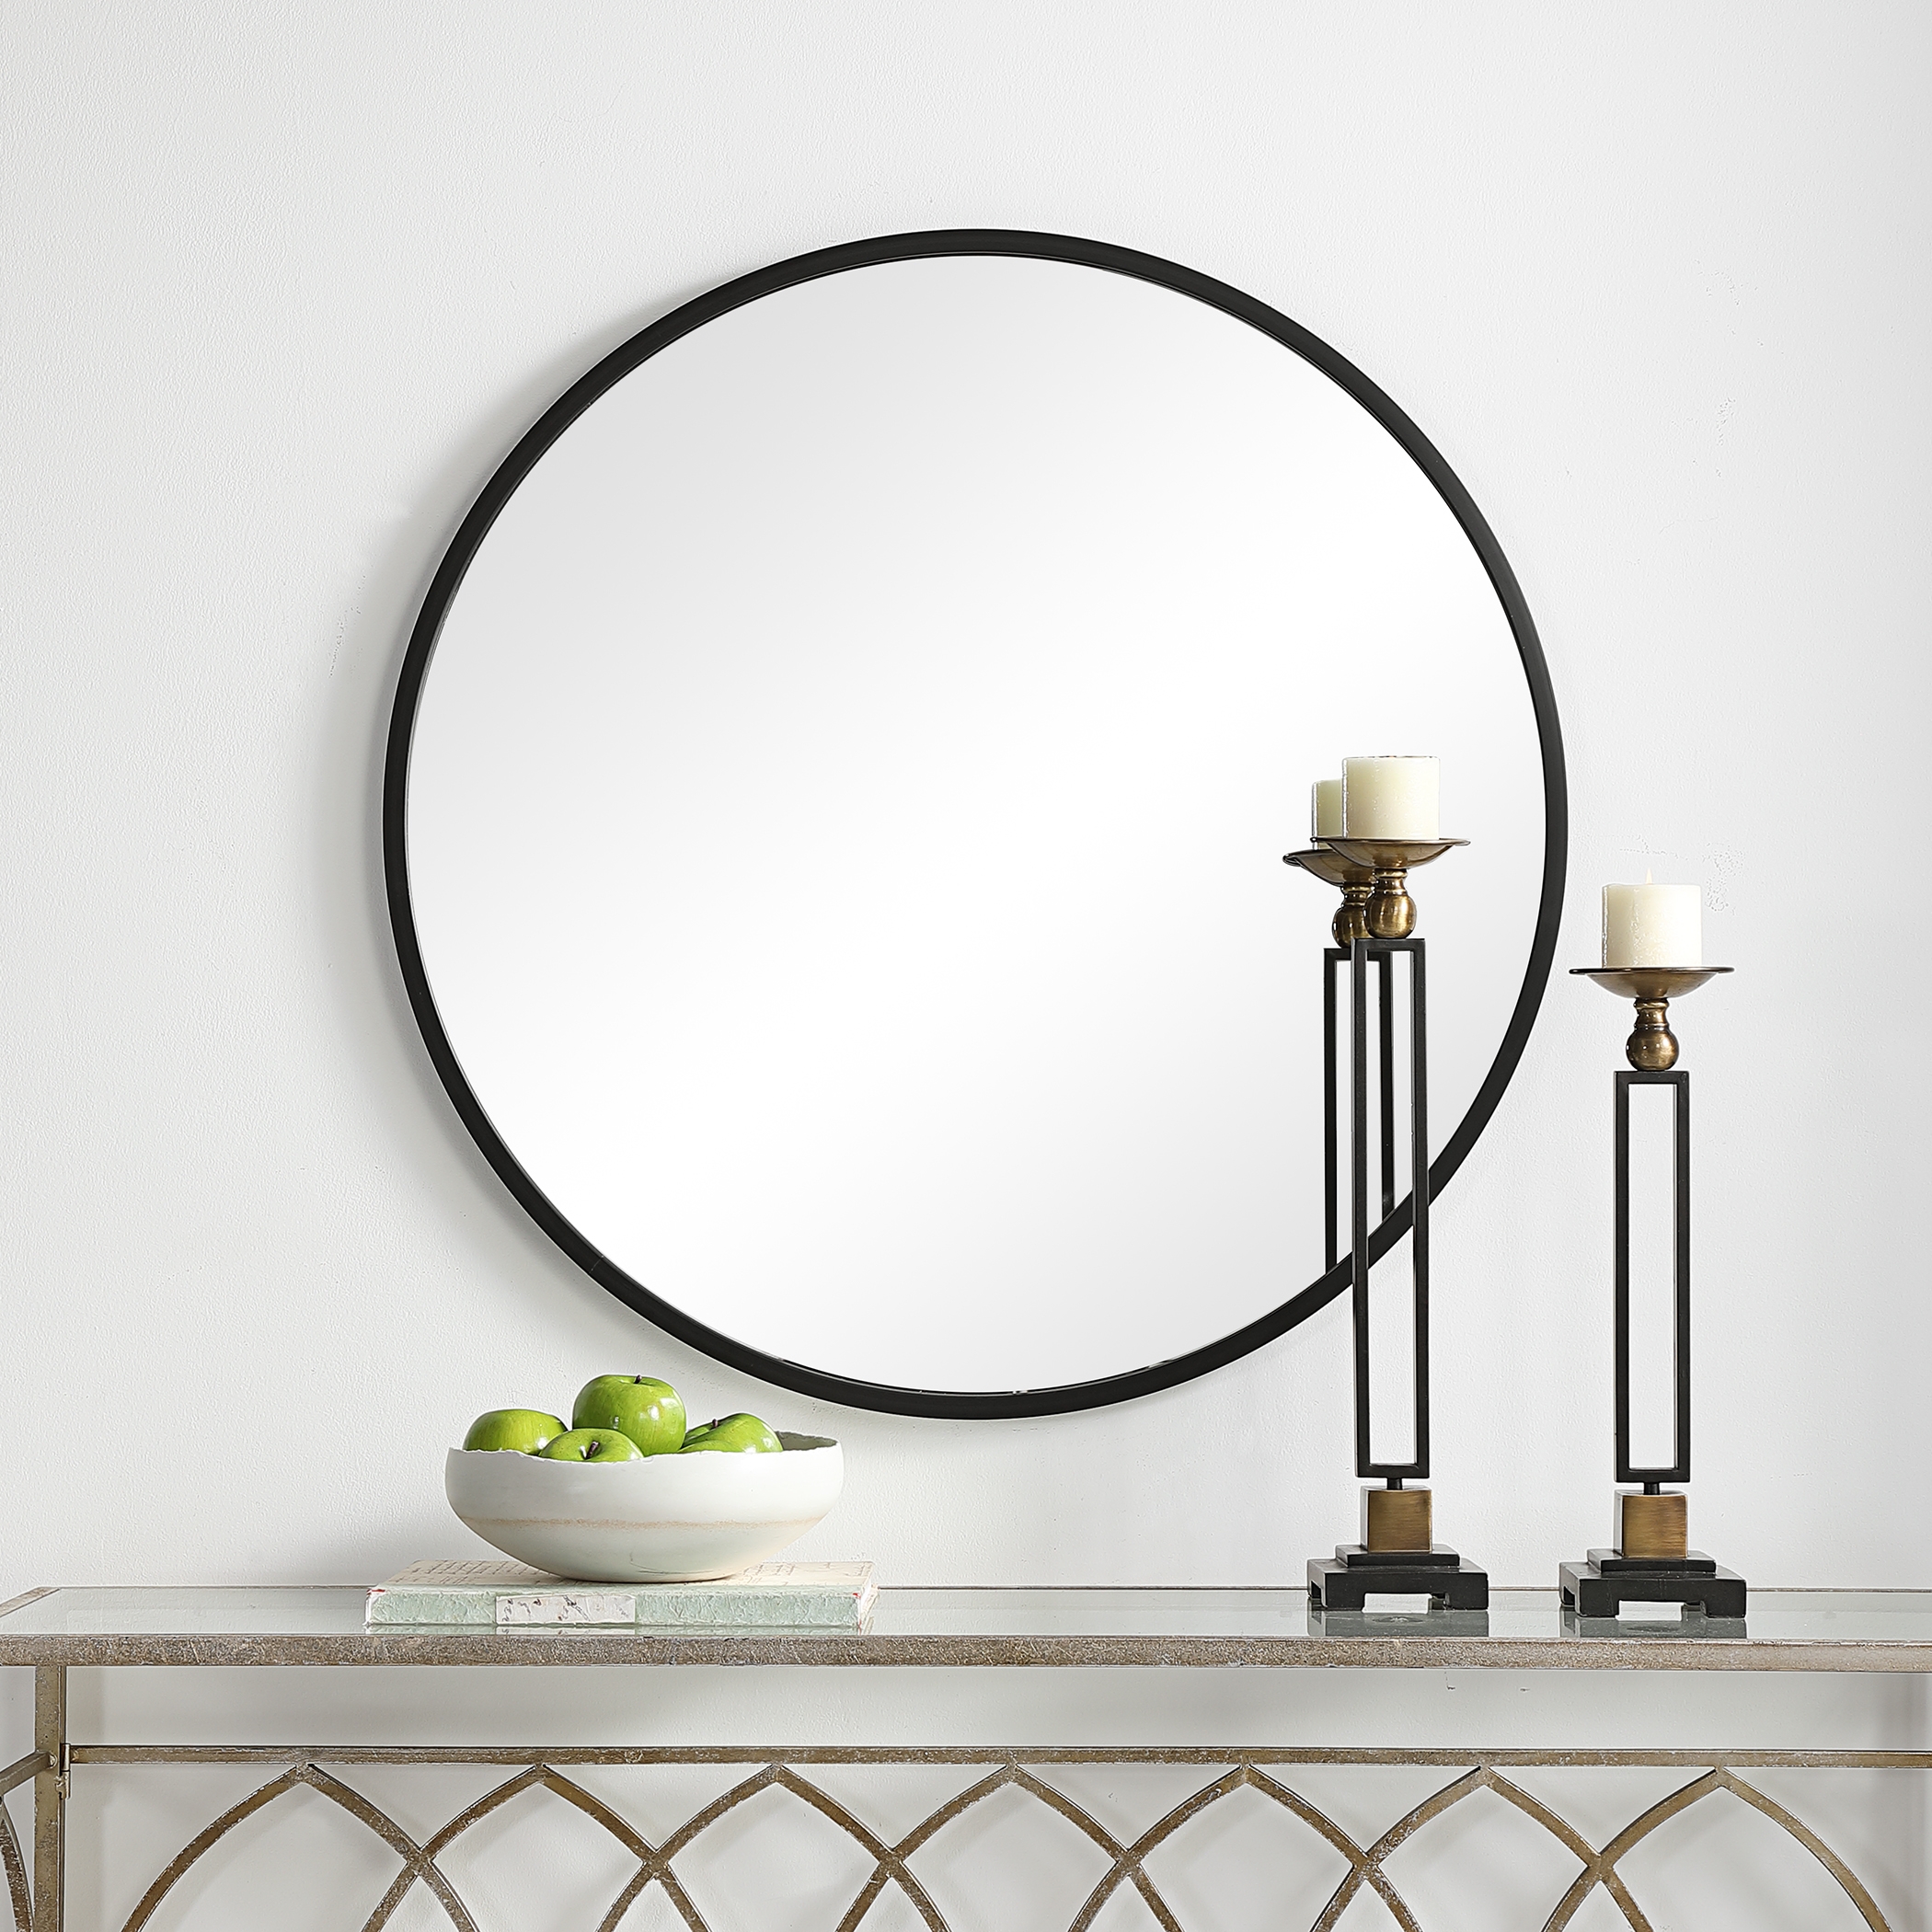 Simple 37" Round Mirror, Black Frame - Image 1